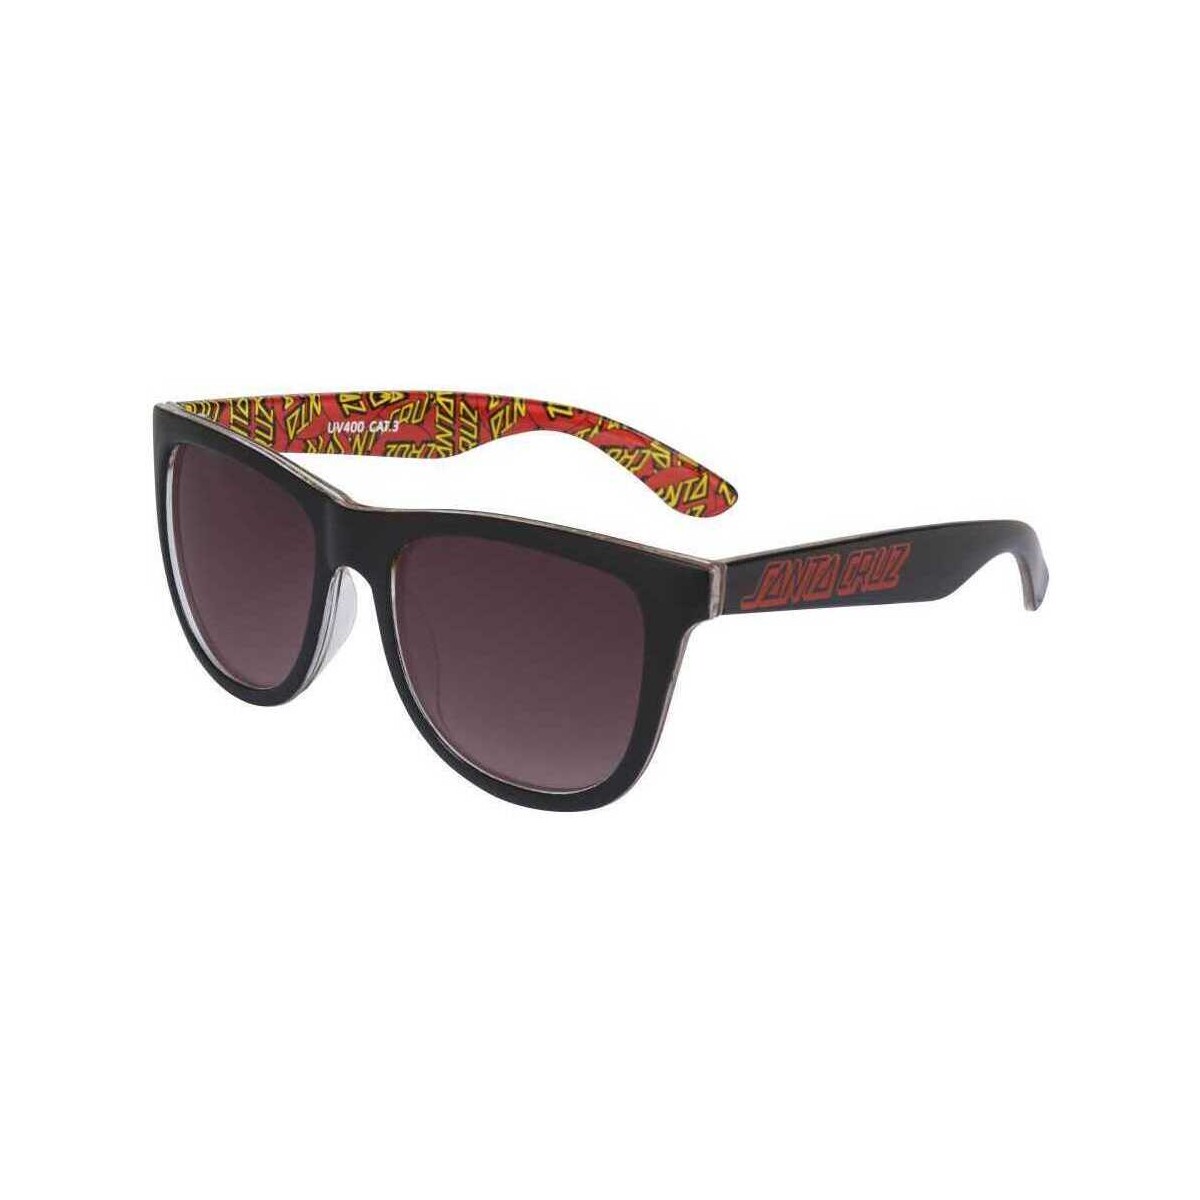 Horloges & Sieraden Heren Zonnebrillen Santa Cruz Multi classic dot sunglasses Zwart